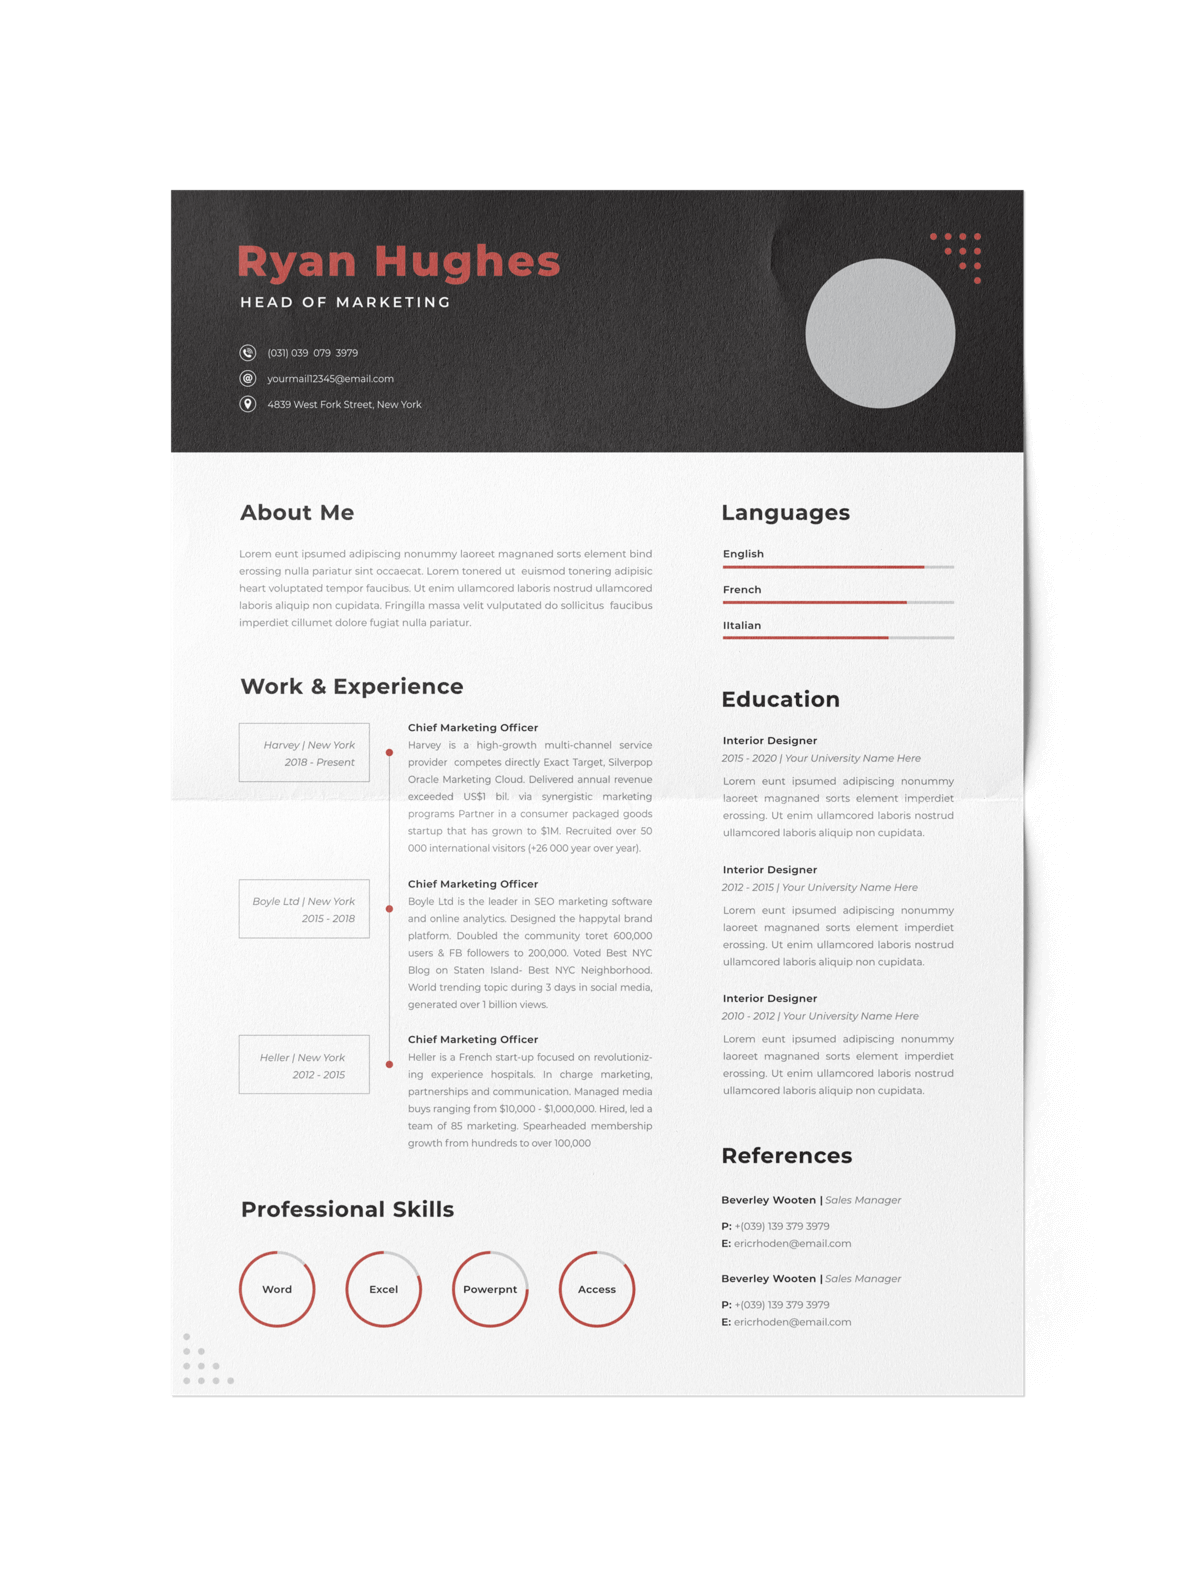 CV #101 Ryan Hughes